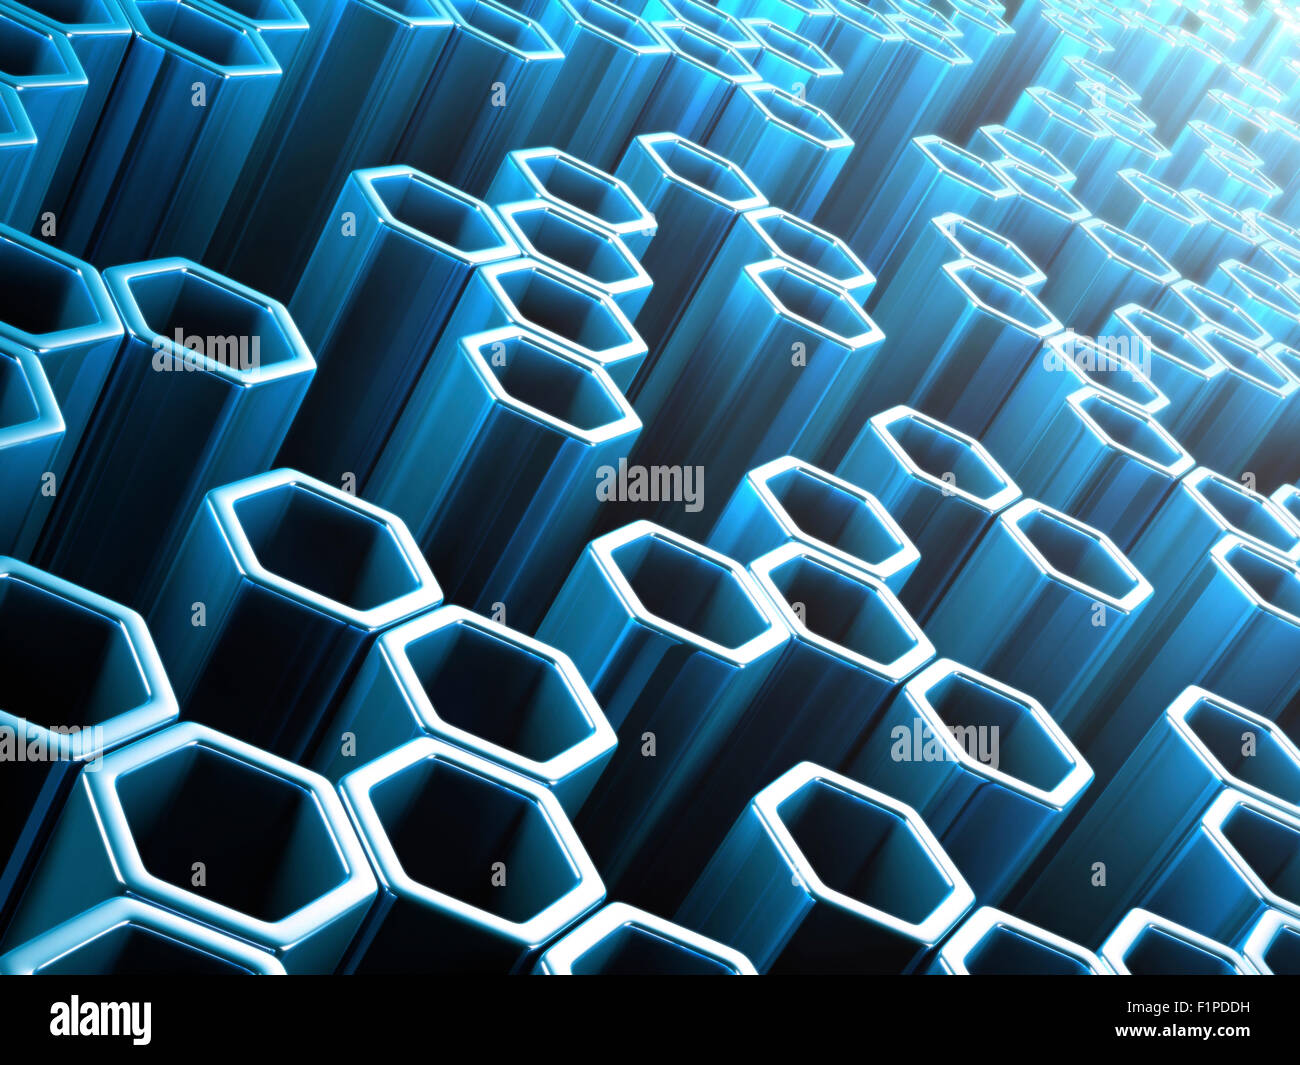 Hexagonal shapes, computer illustration. Stock Photo